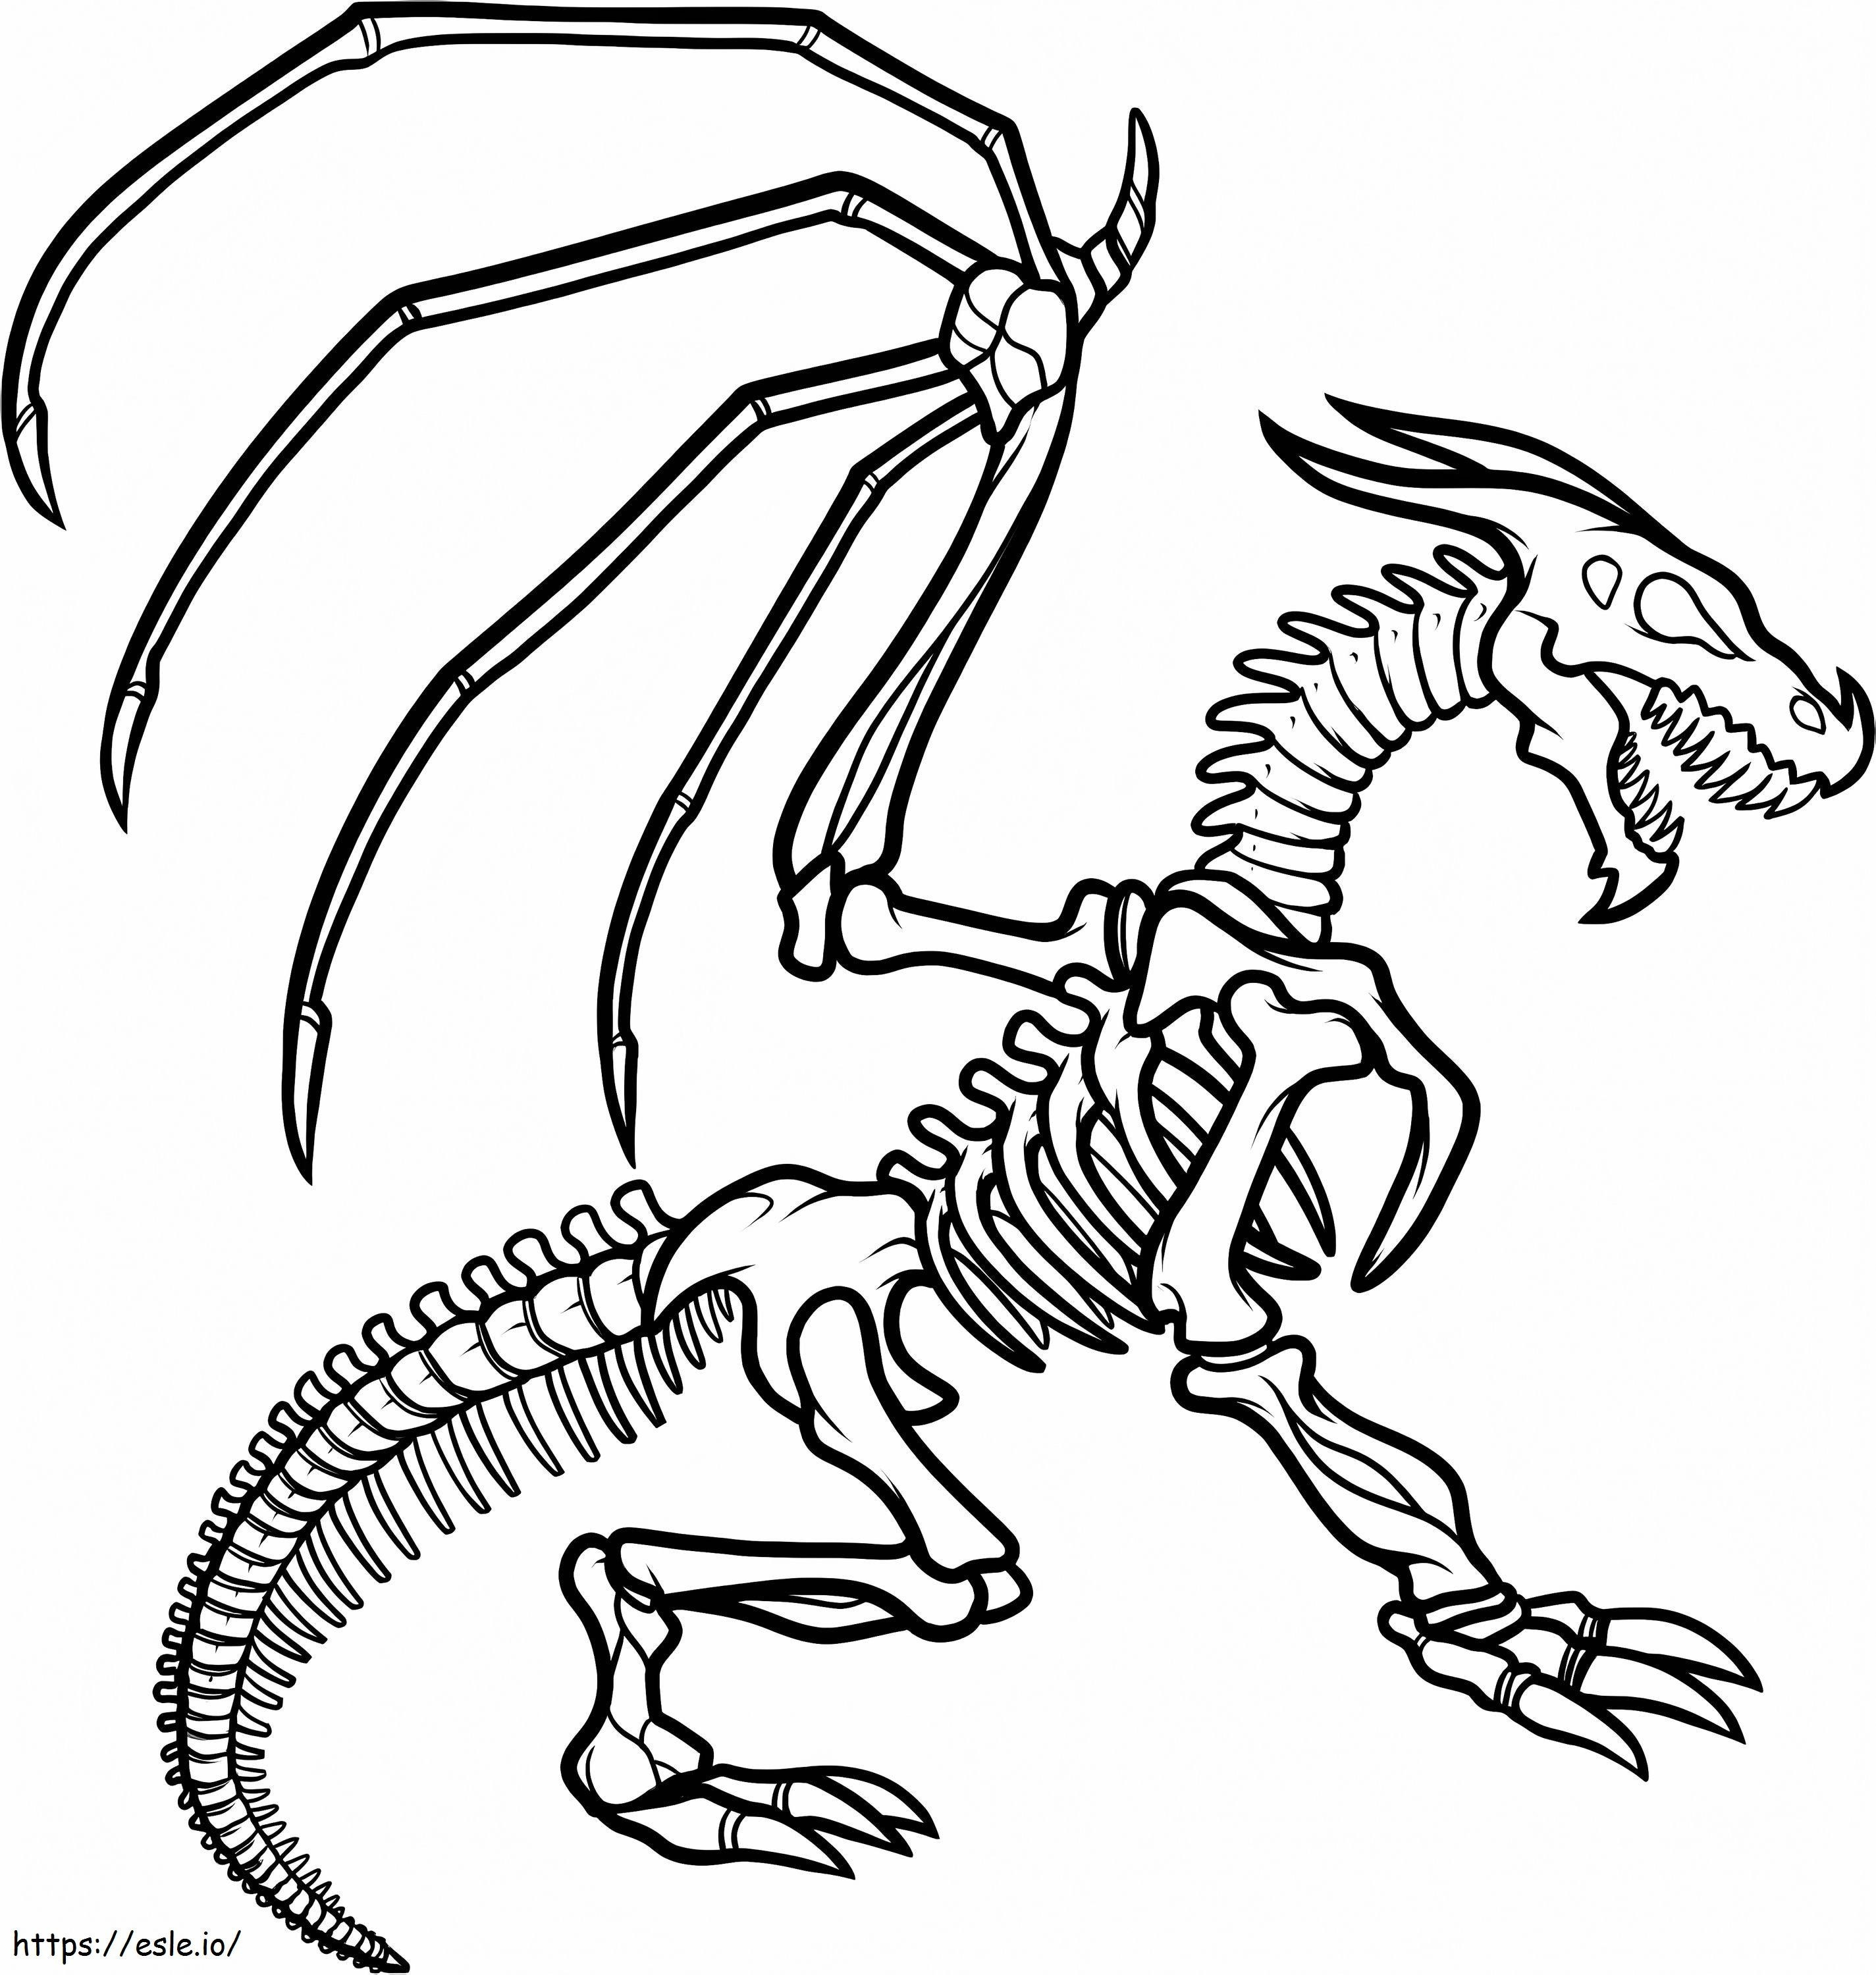 Creepy Skeleton Dragon coloring page